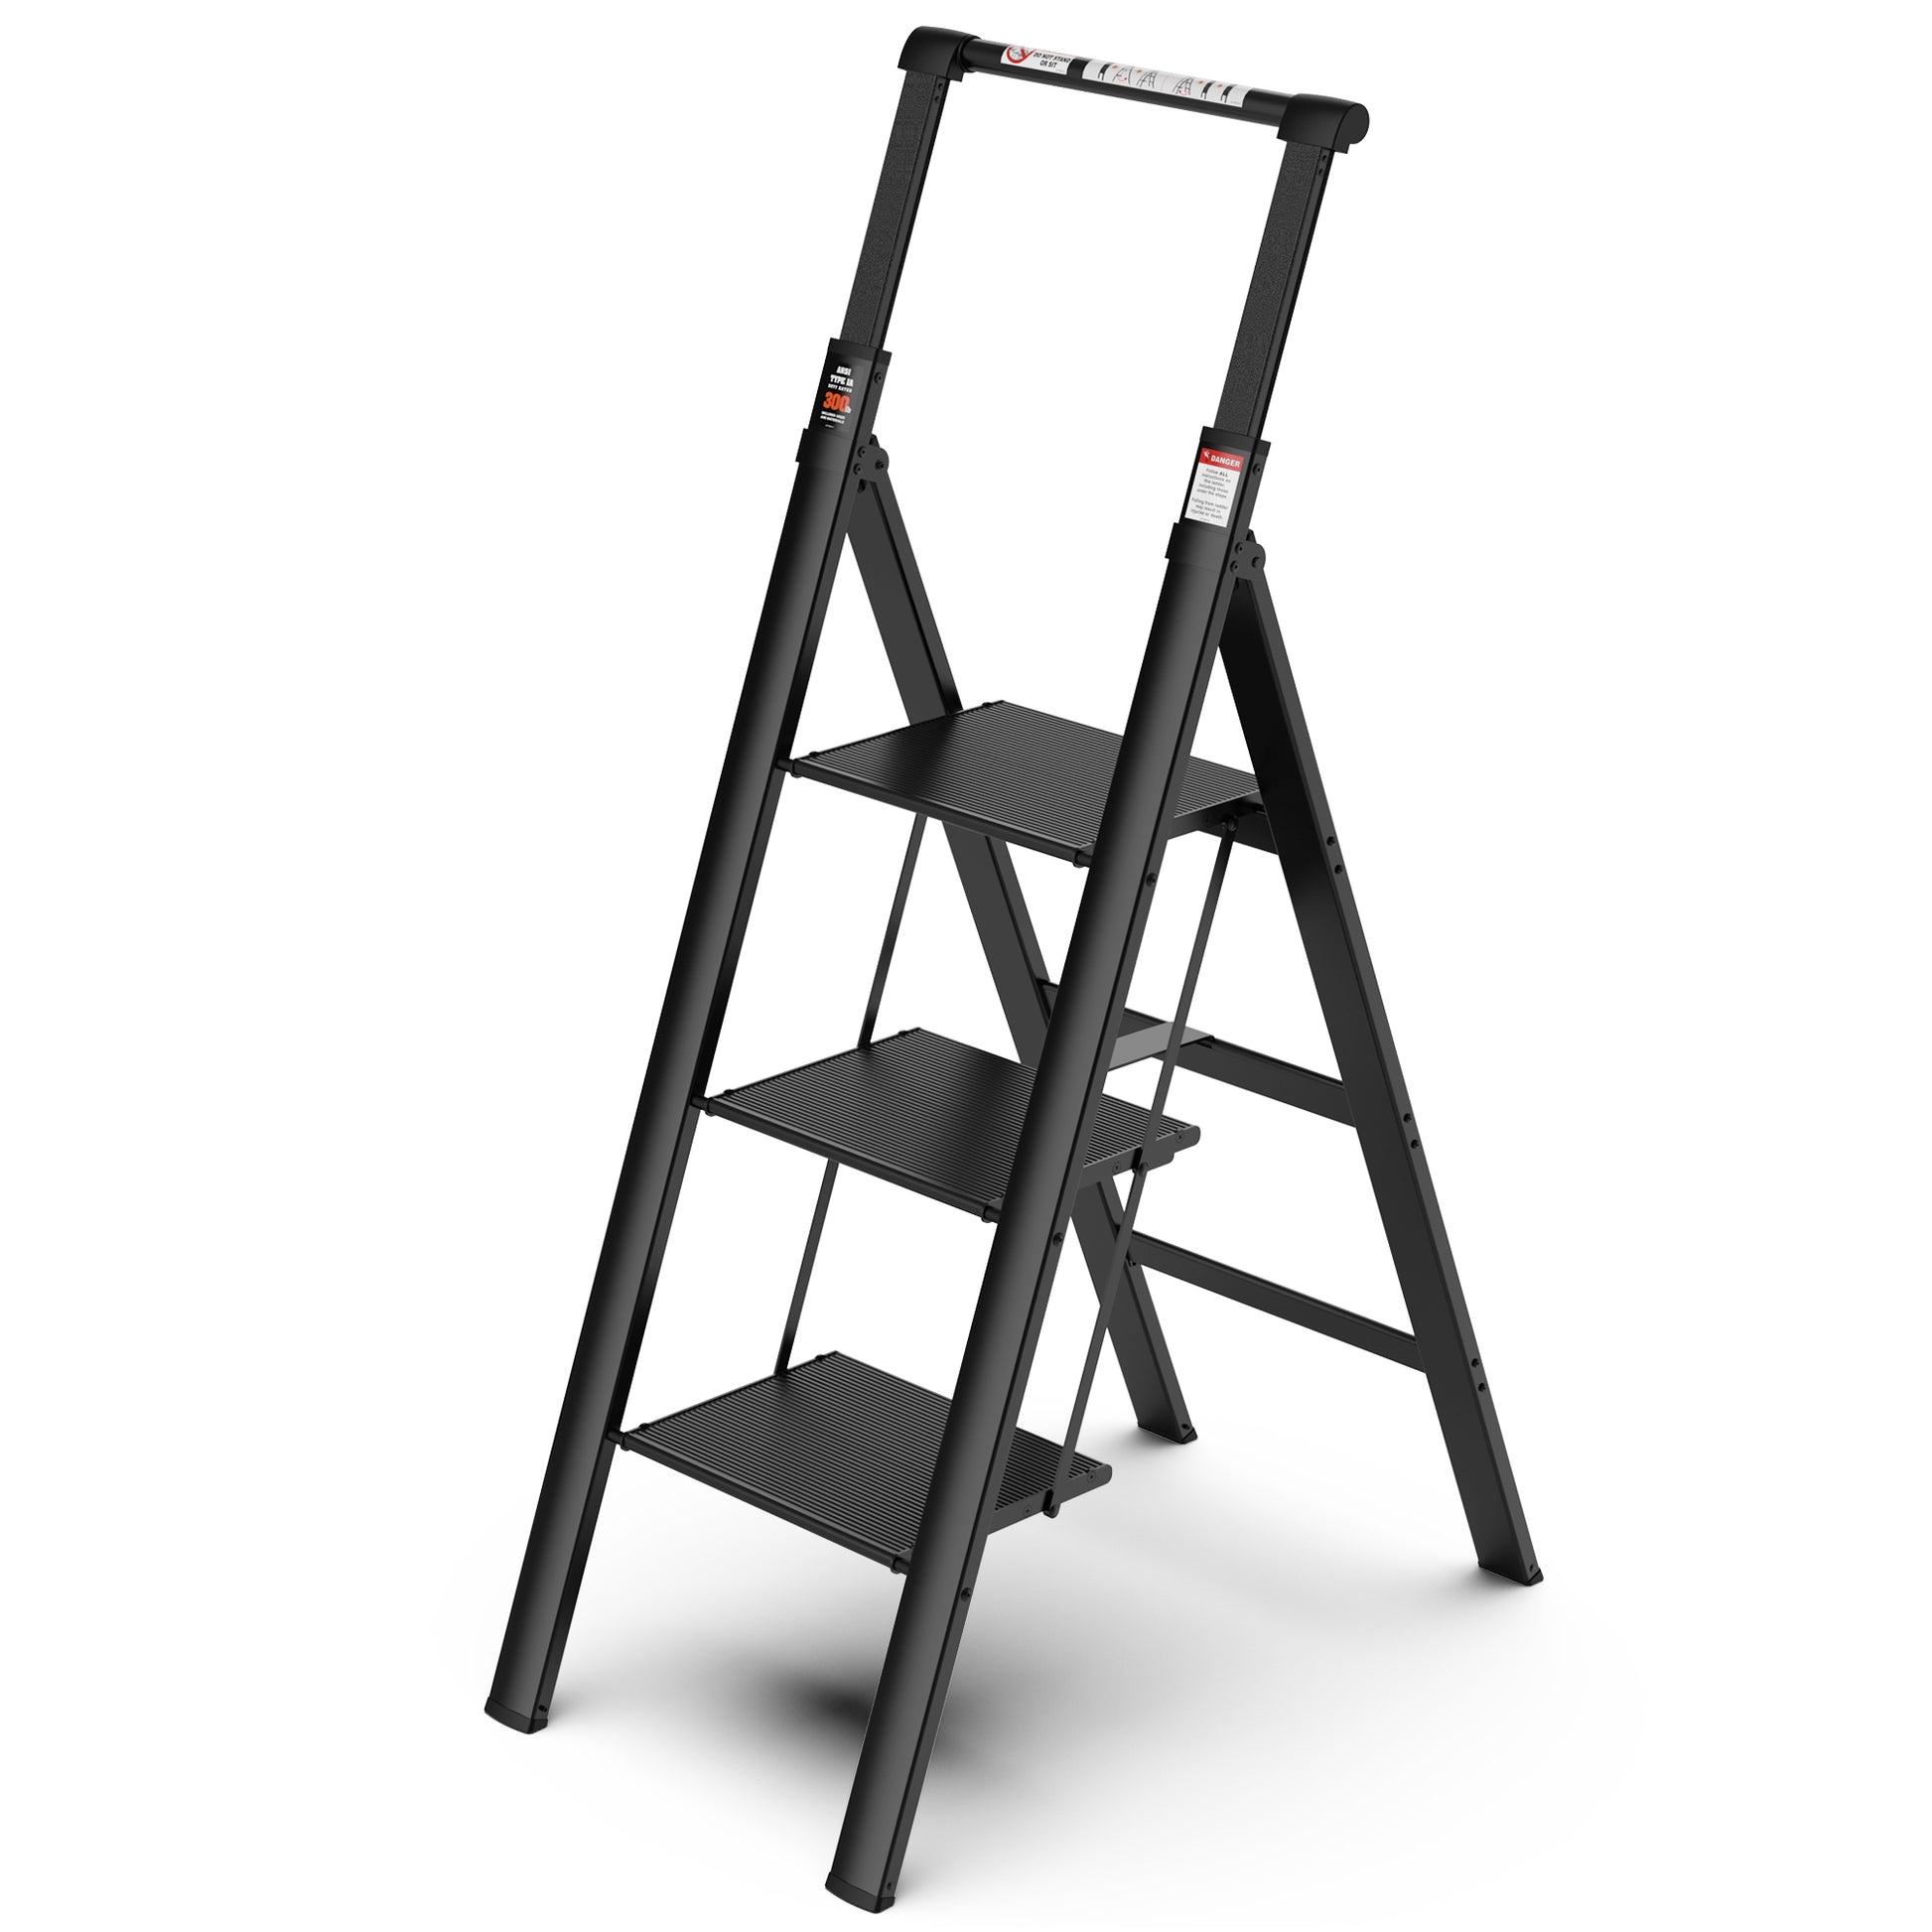 3 Step Ladder, Retractable Handgrip Folding Step Stool black-pc-aluminium